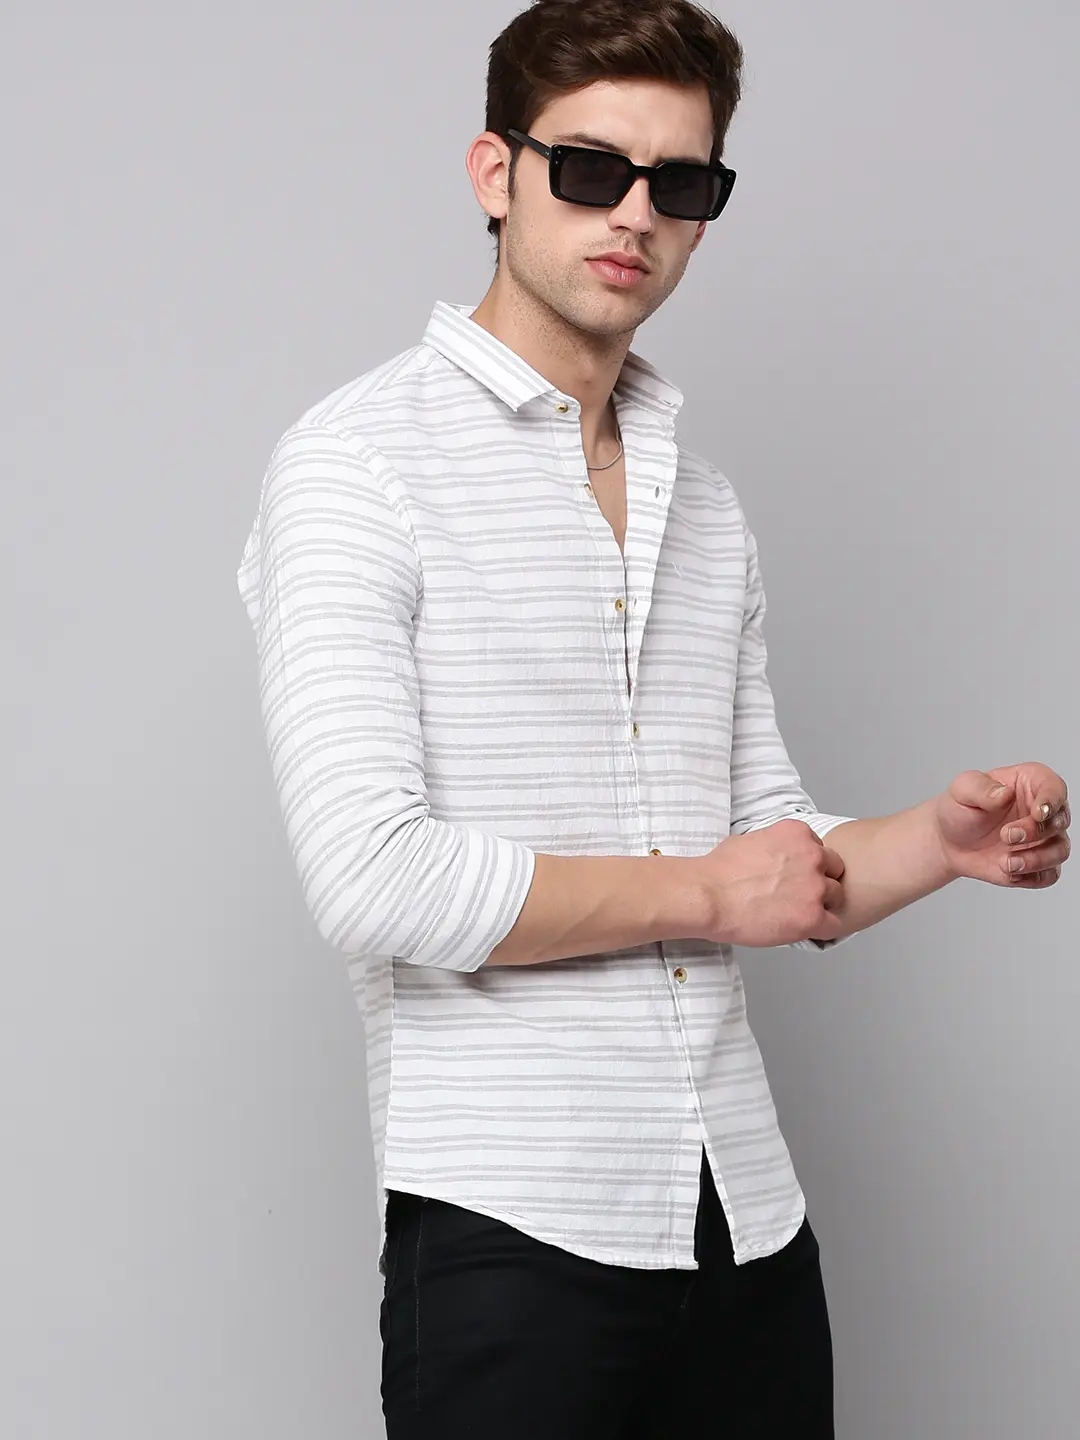 SHOWOFF Men's Spread Collar White Striped Shirt